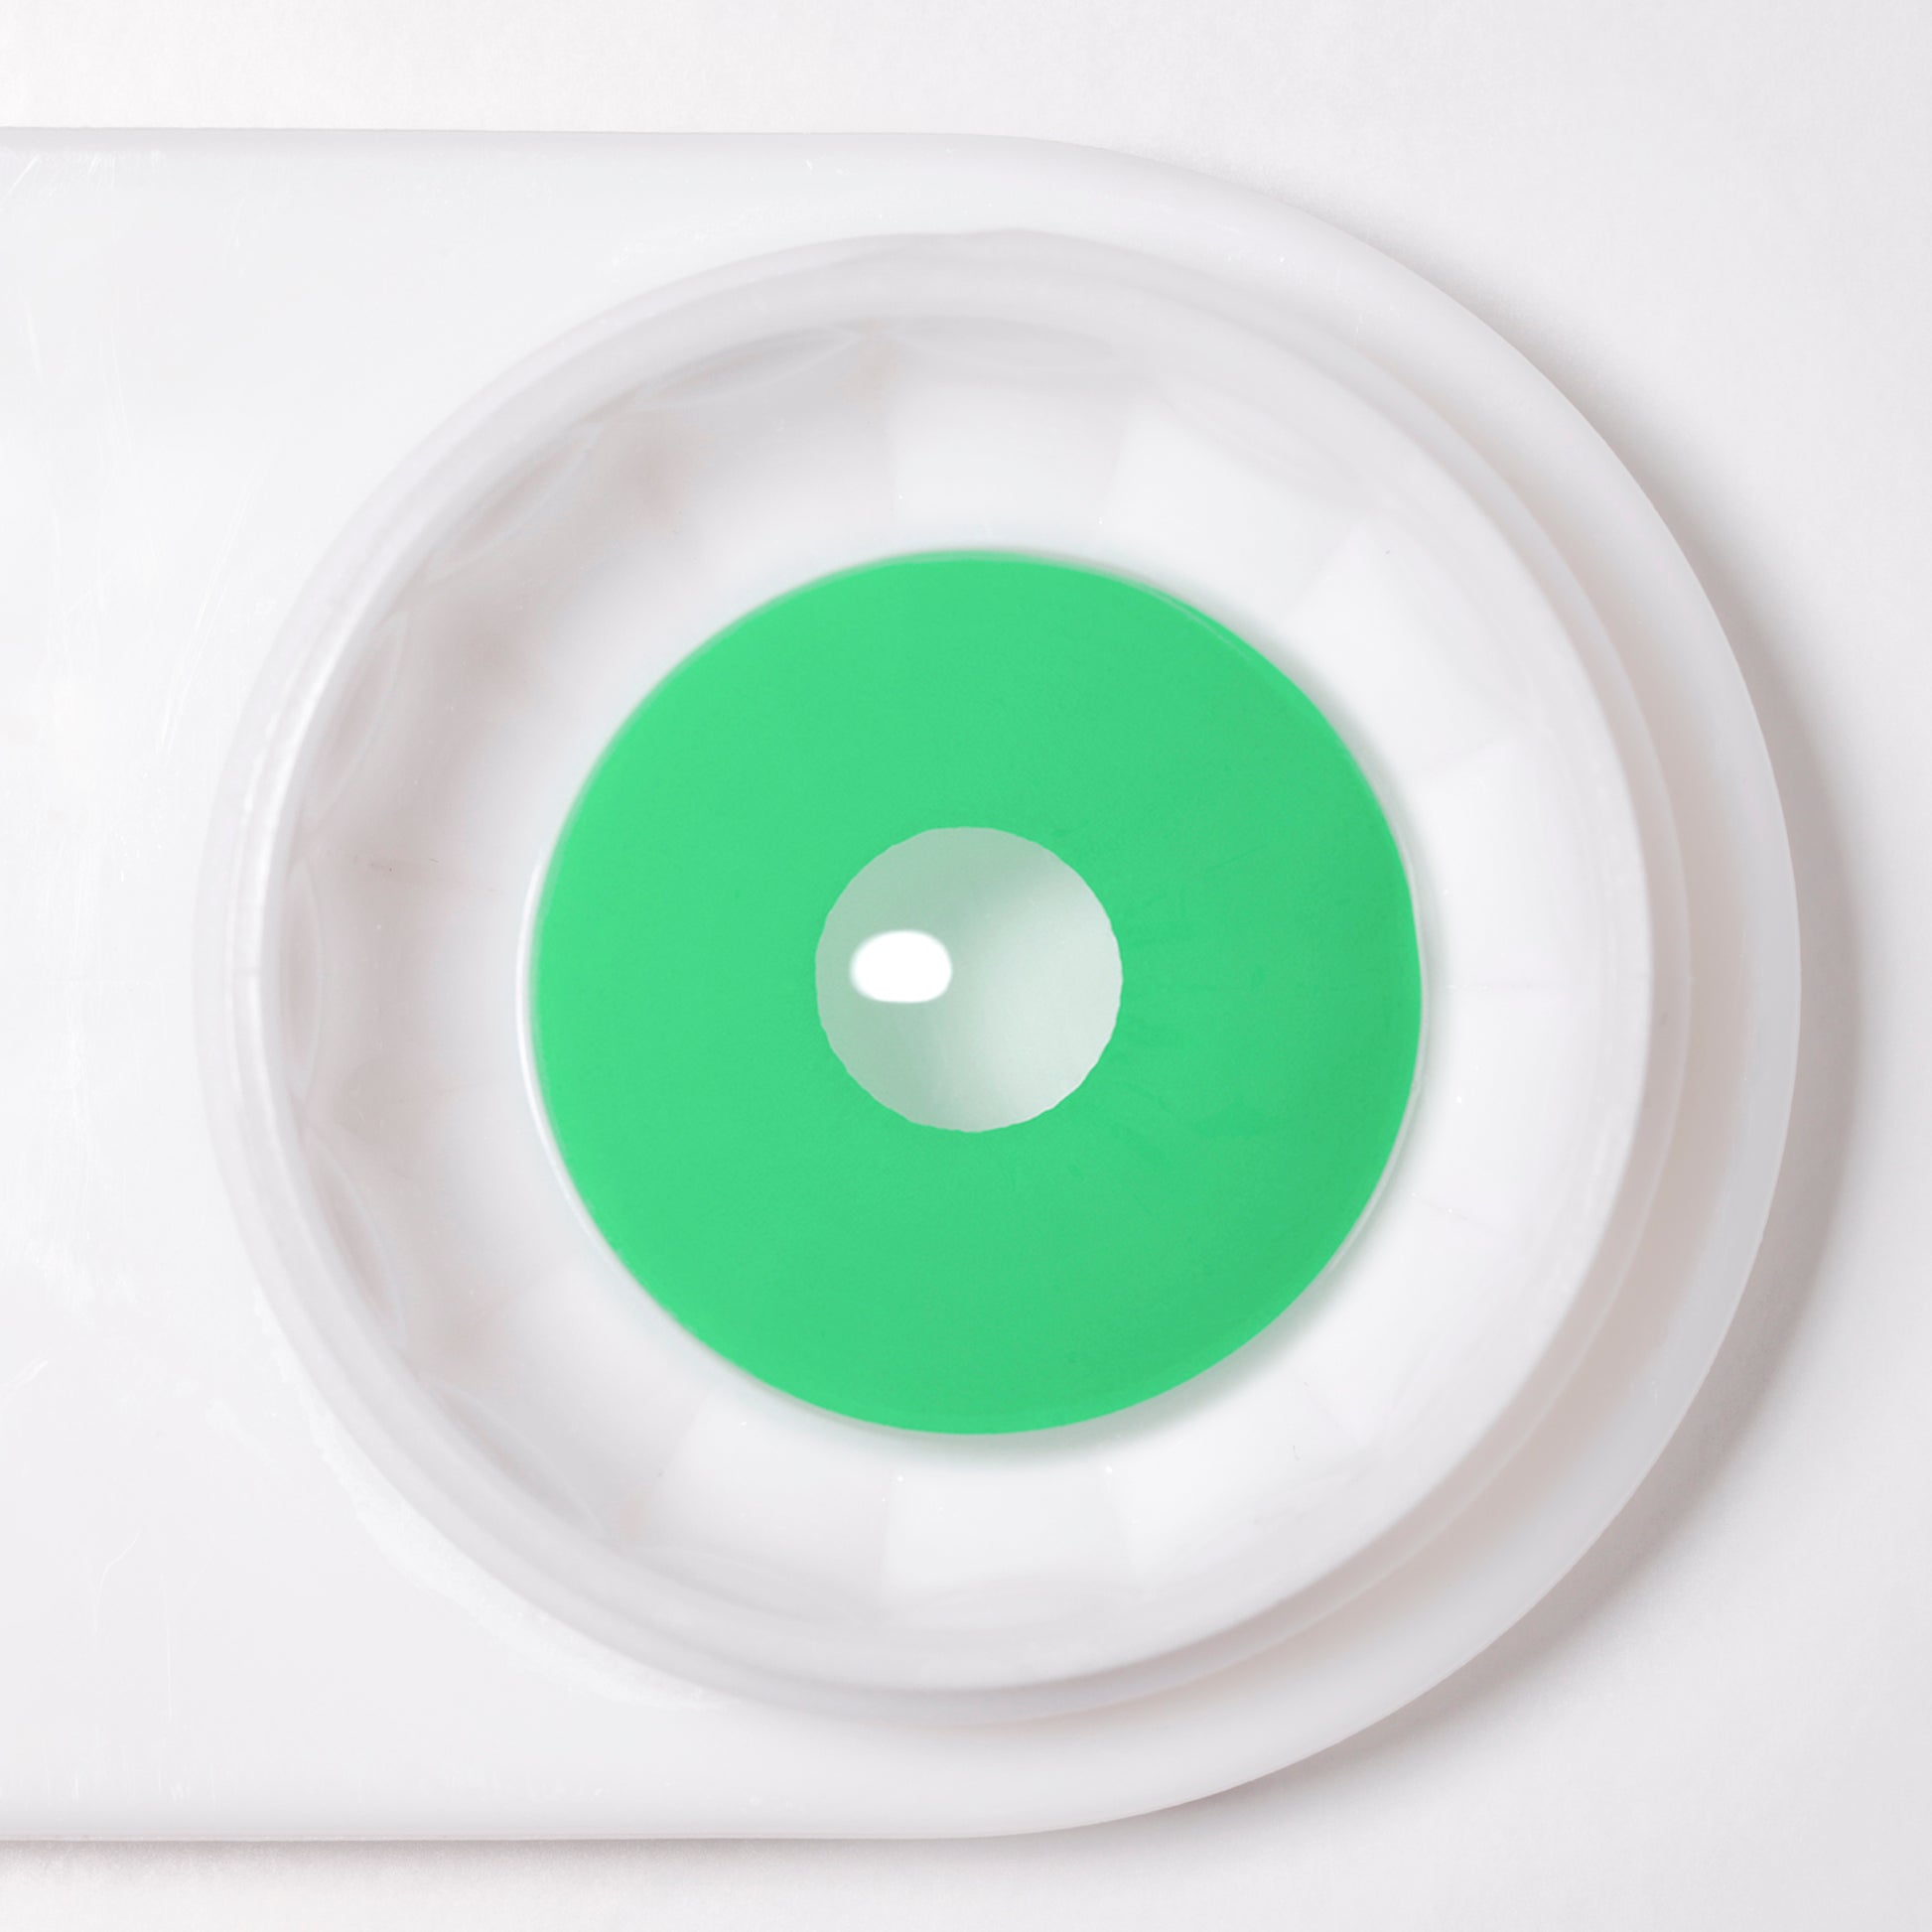 UV Glow Green Mini Sclera Contacts